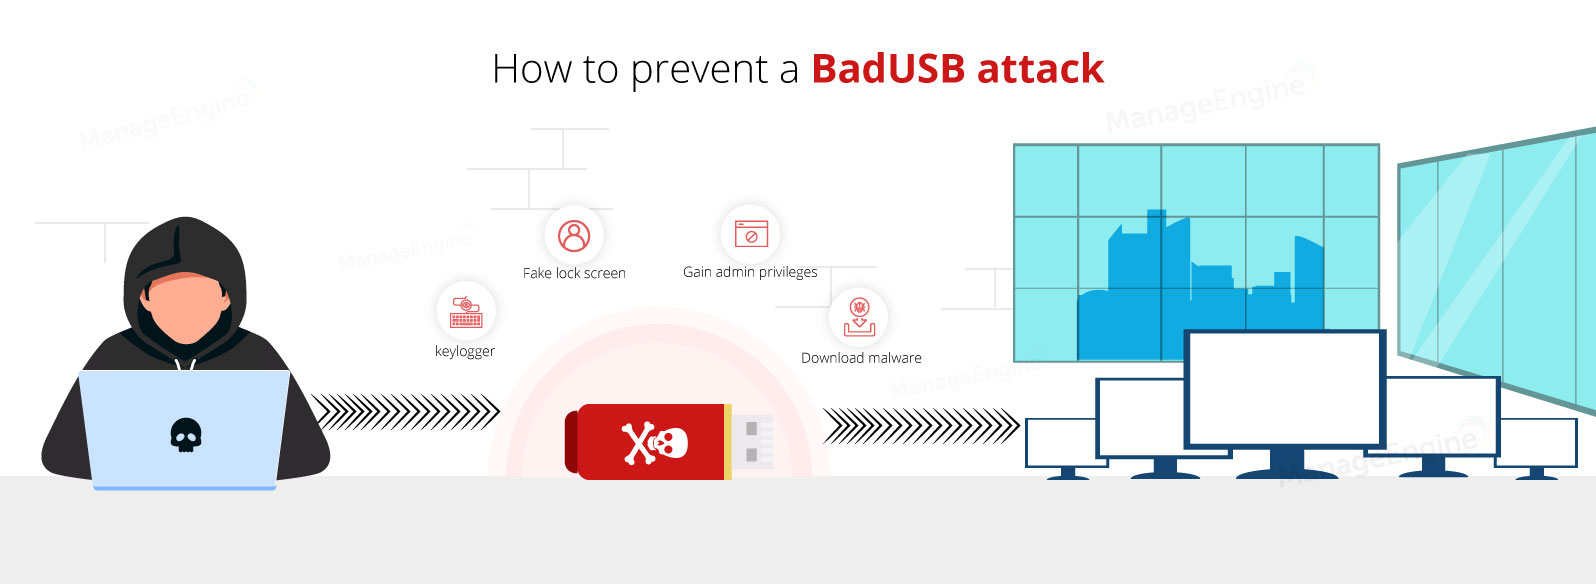 BadUSB exploit prevention - ManageEngine Device Control Plus